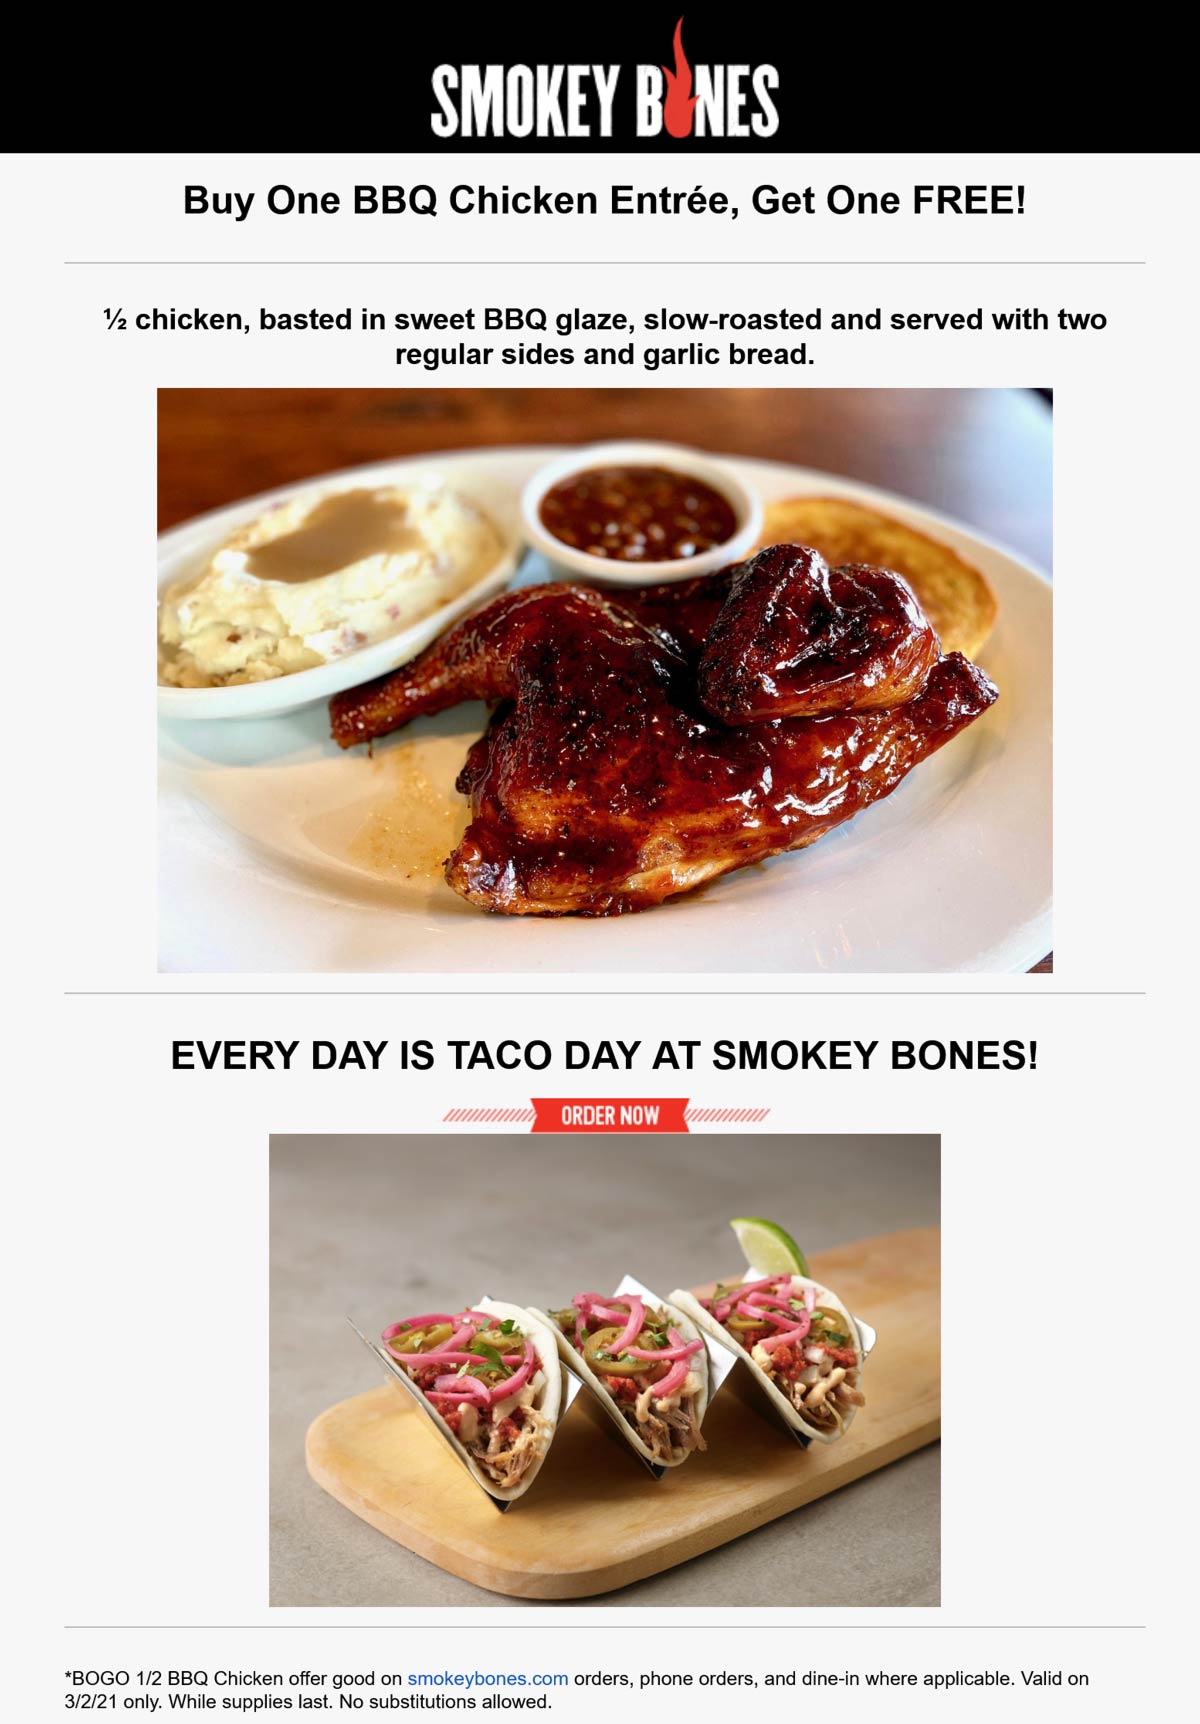 Smokey Bones restaurants Coupon  Second bbq chicken entree free today at Smokey Bones #smokeybones 